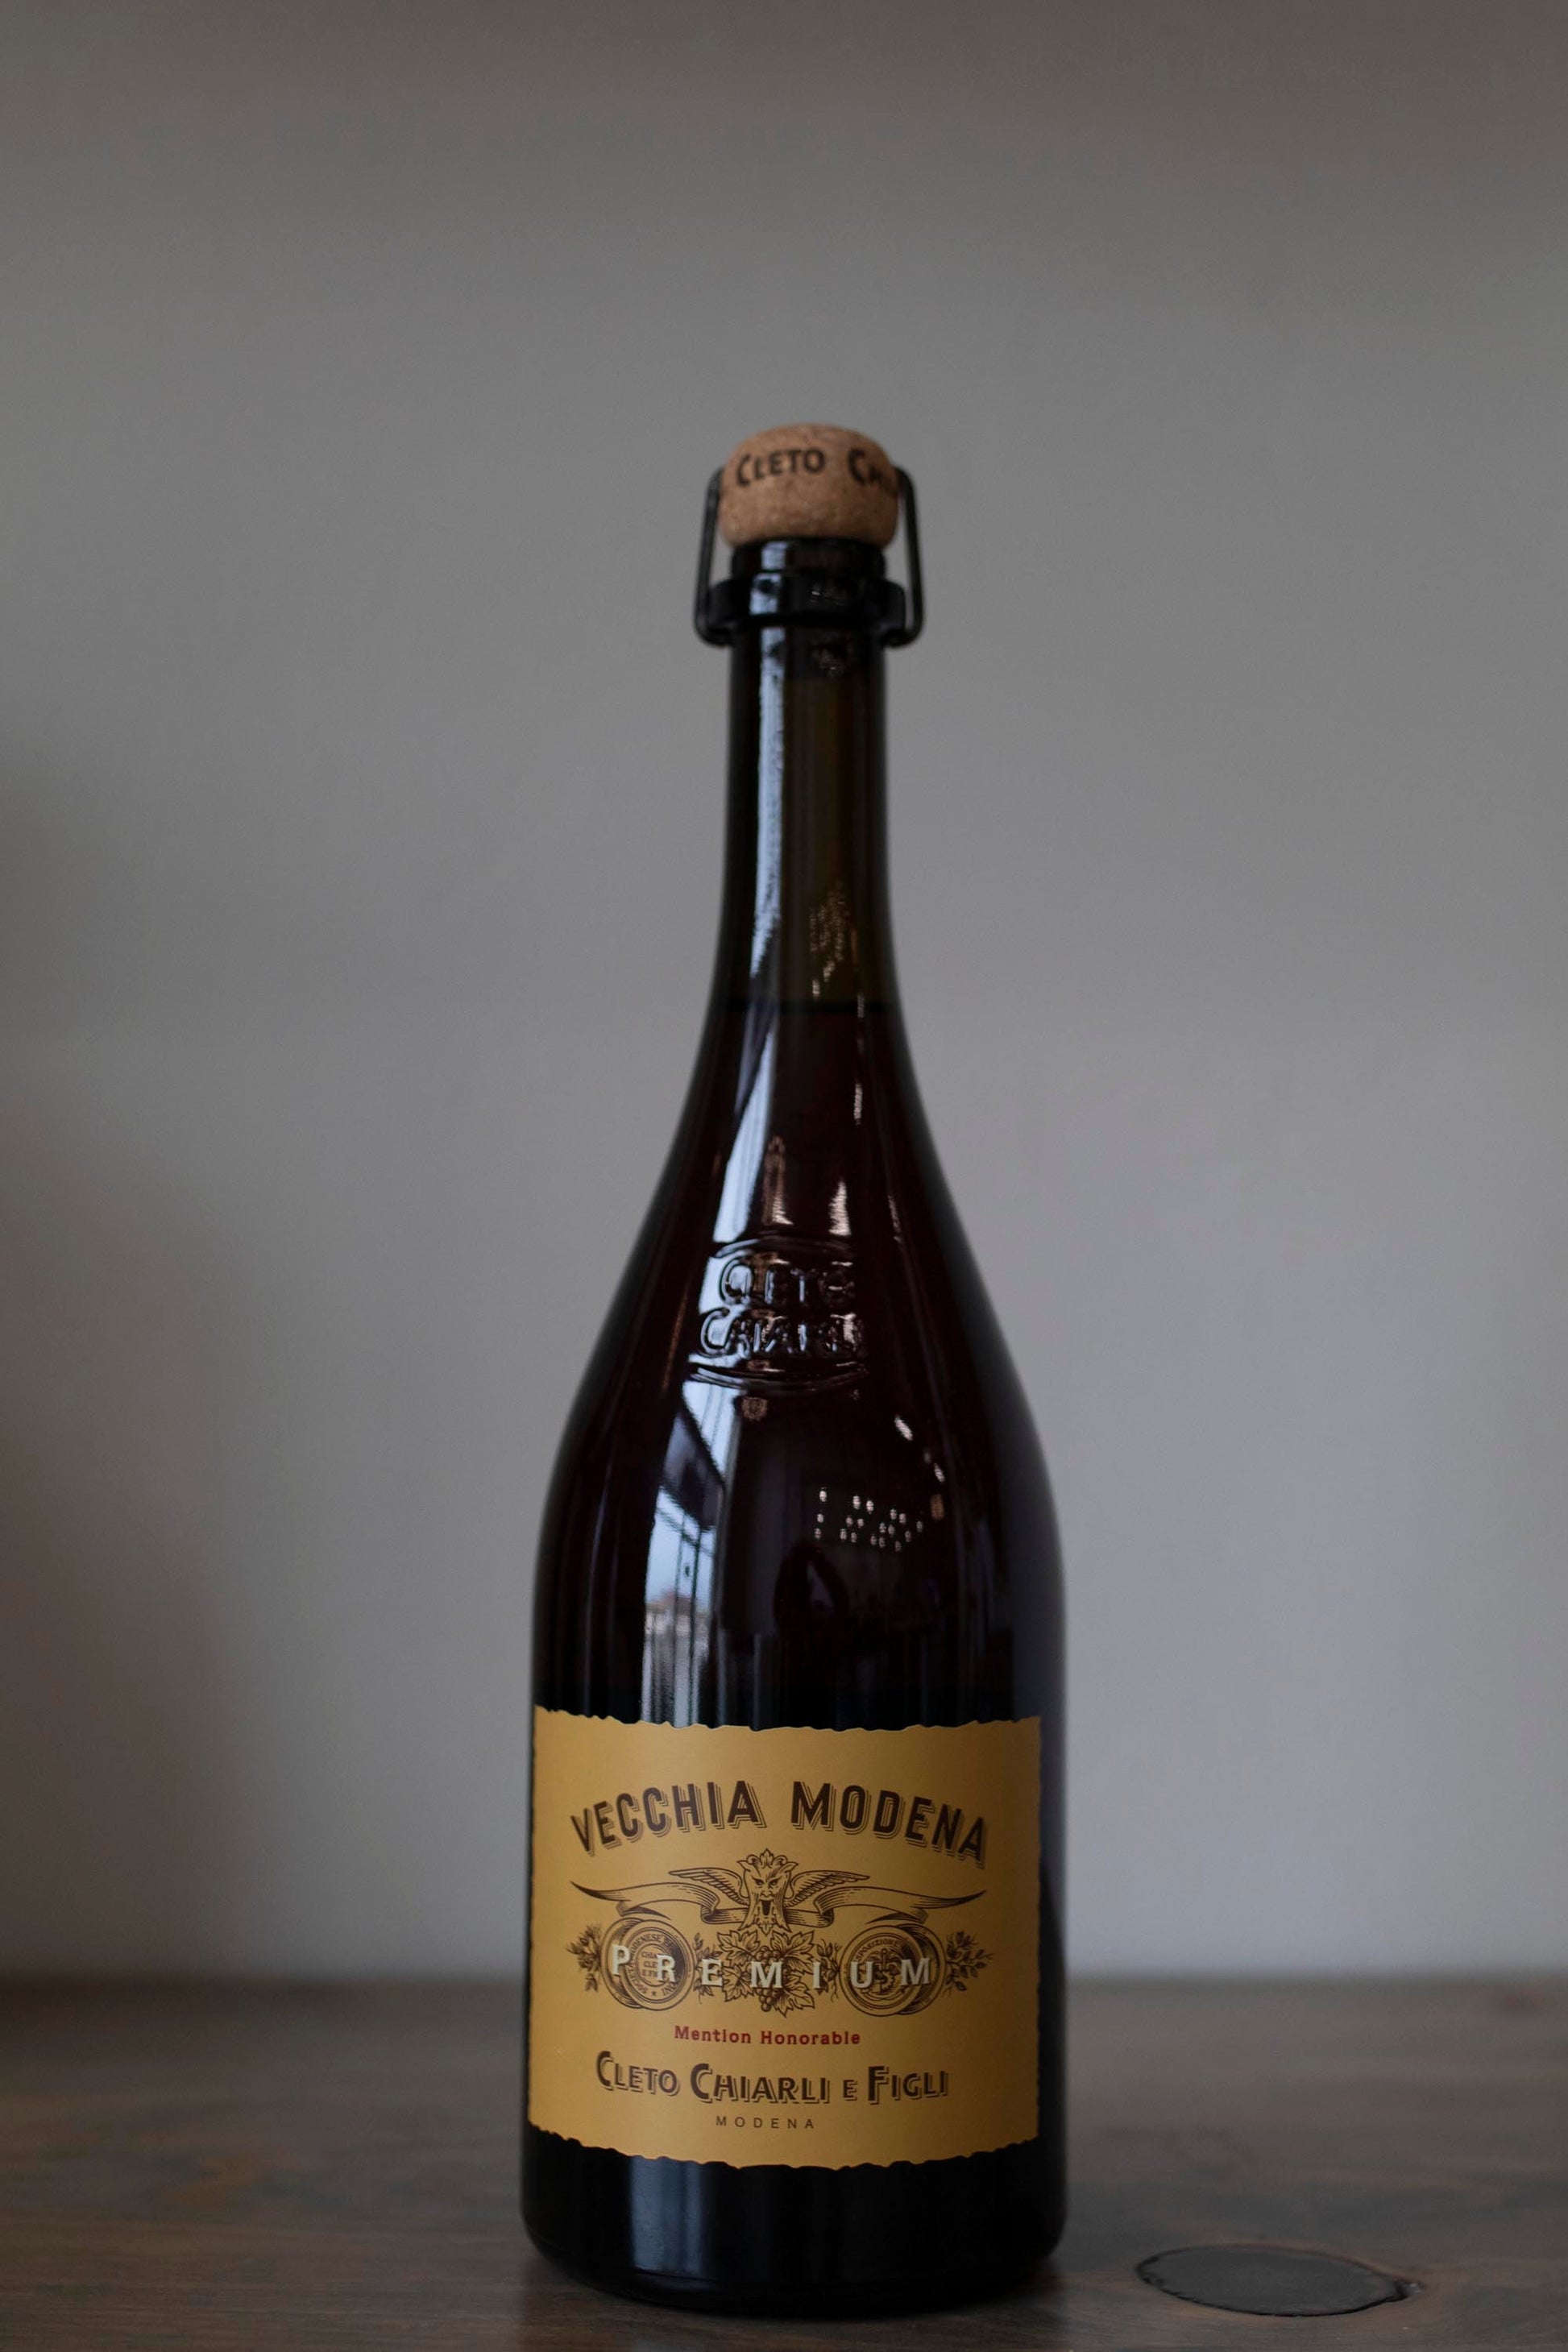 Bottle of Cleto Chiarli Vecchia Modena found at Vine & Board in 3809 NW 166th St Suite 1, Edmond, OK 73012